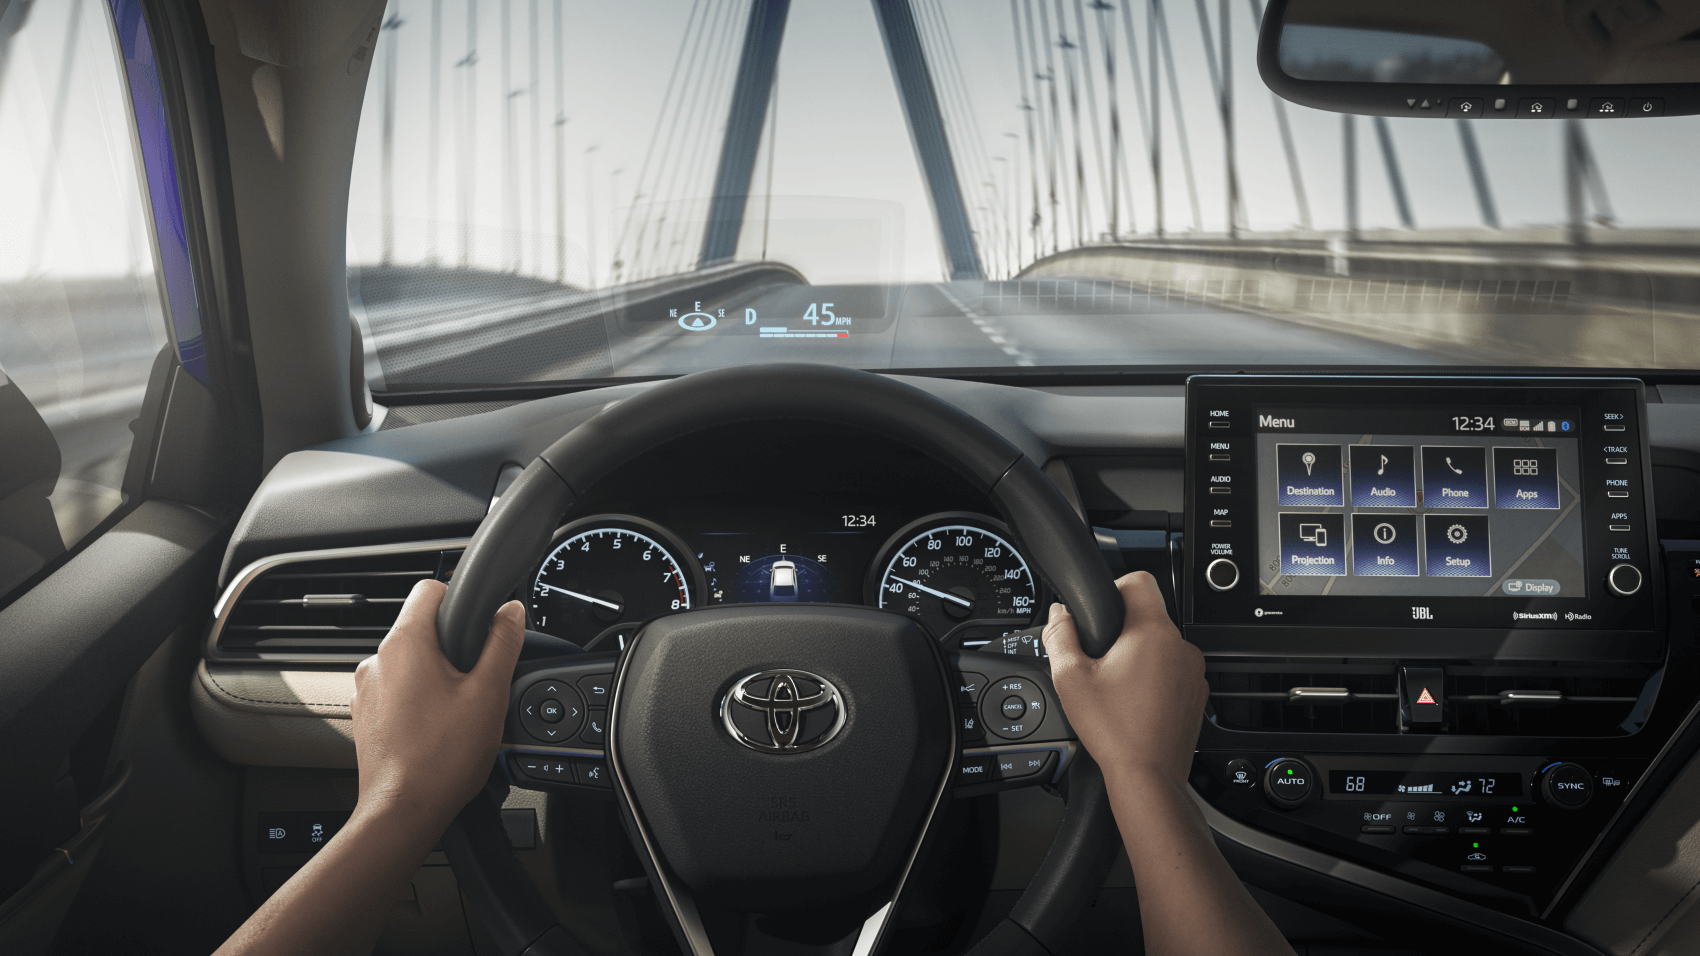  2021 Toyota Camry Interior Dashboard Tech